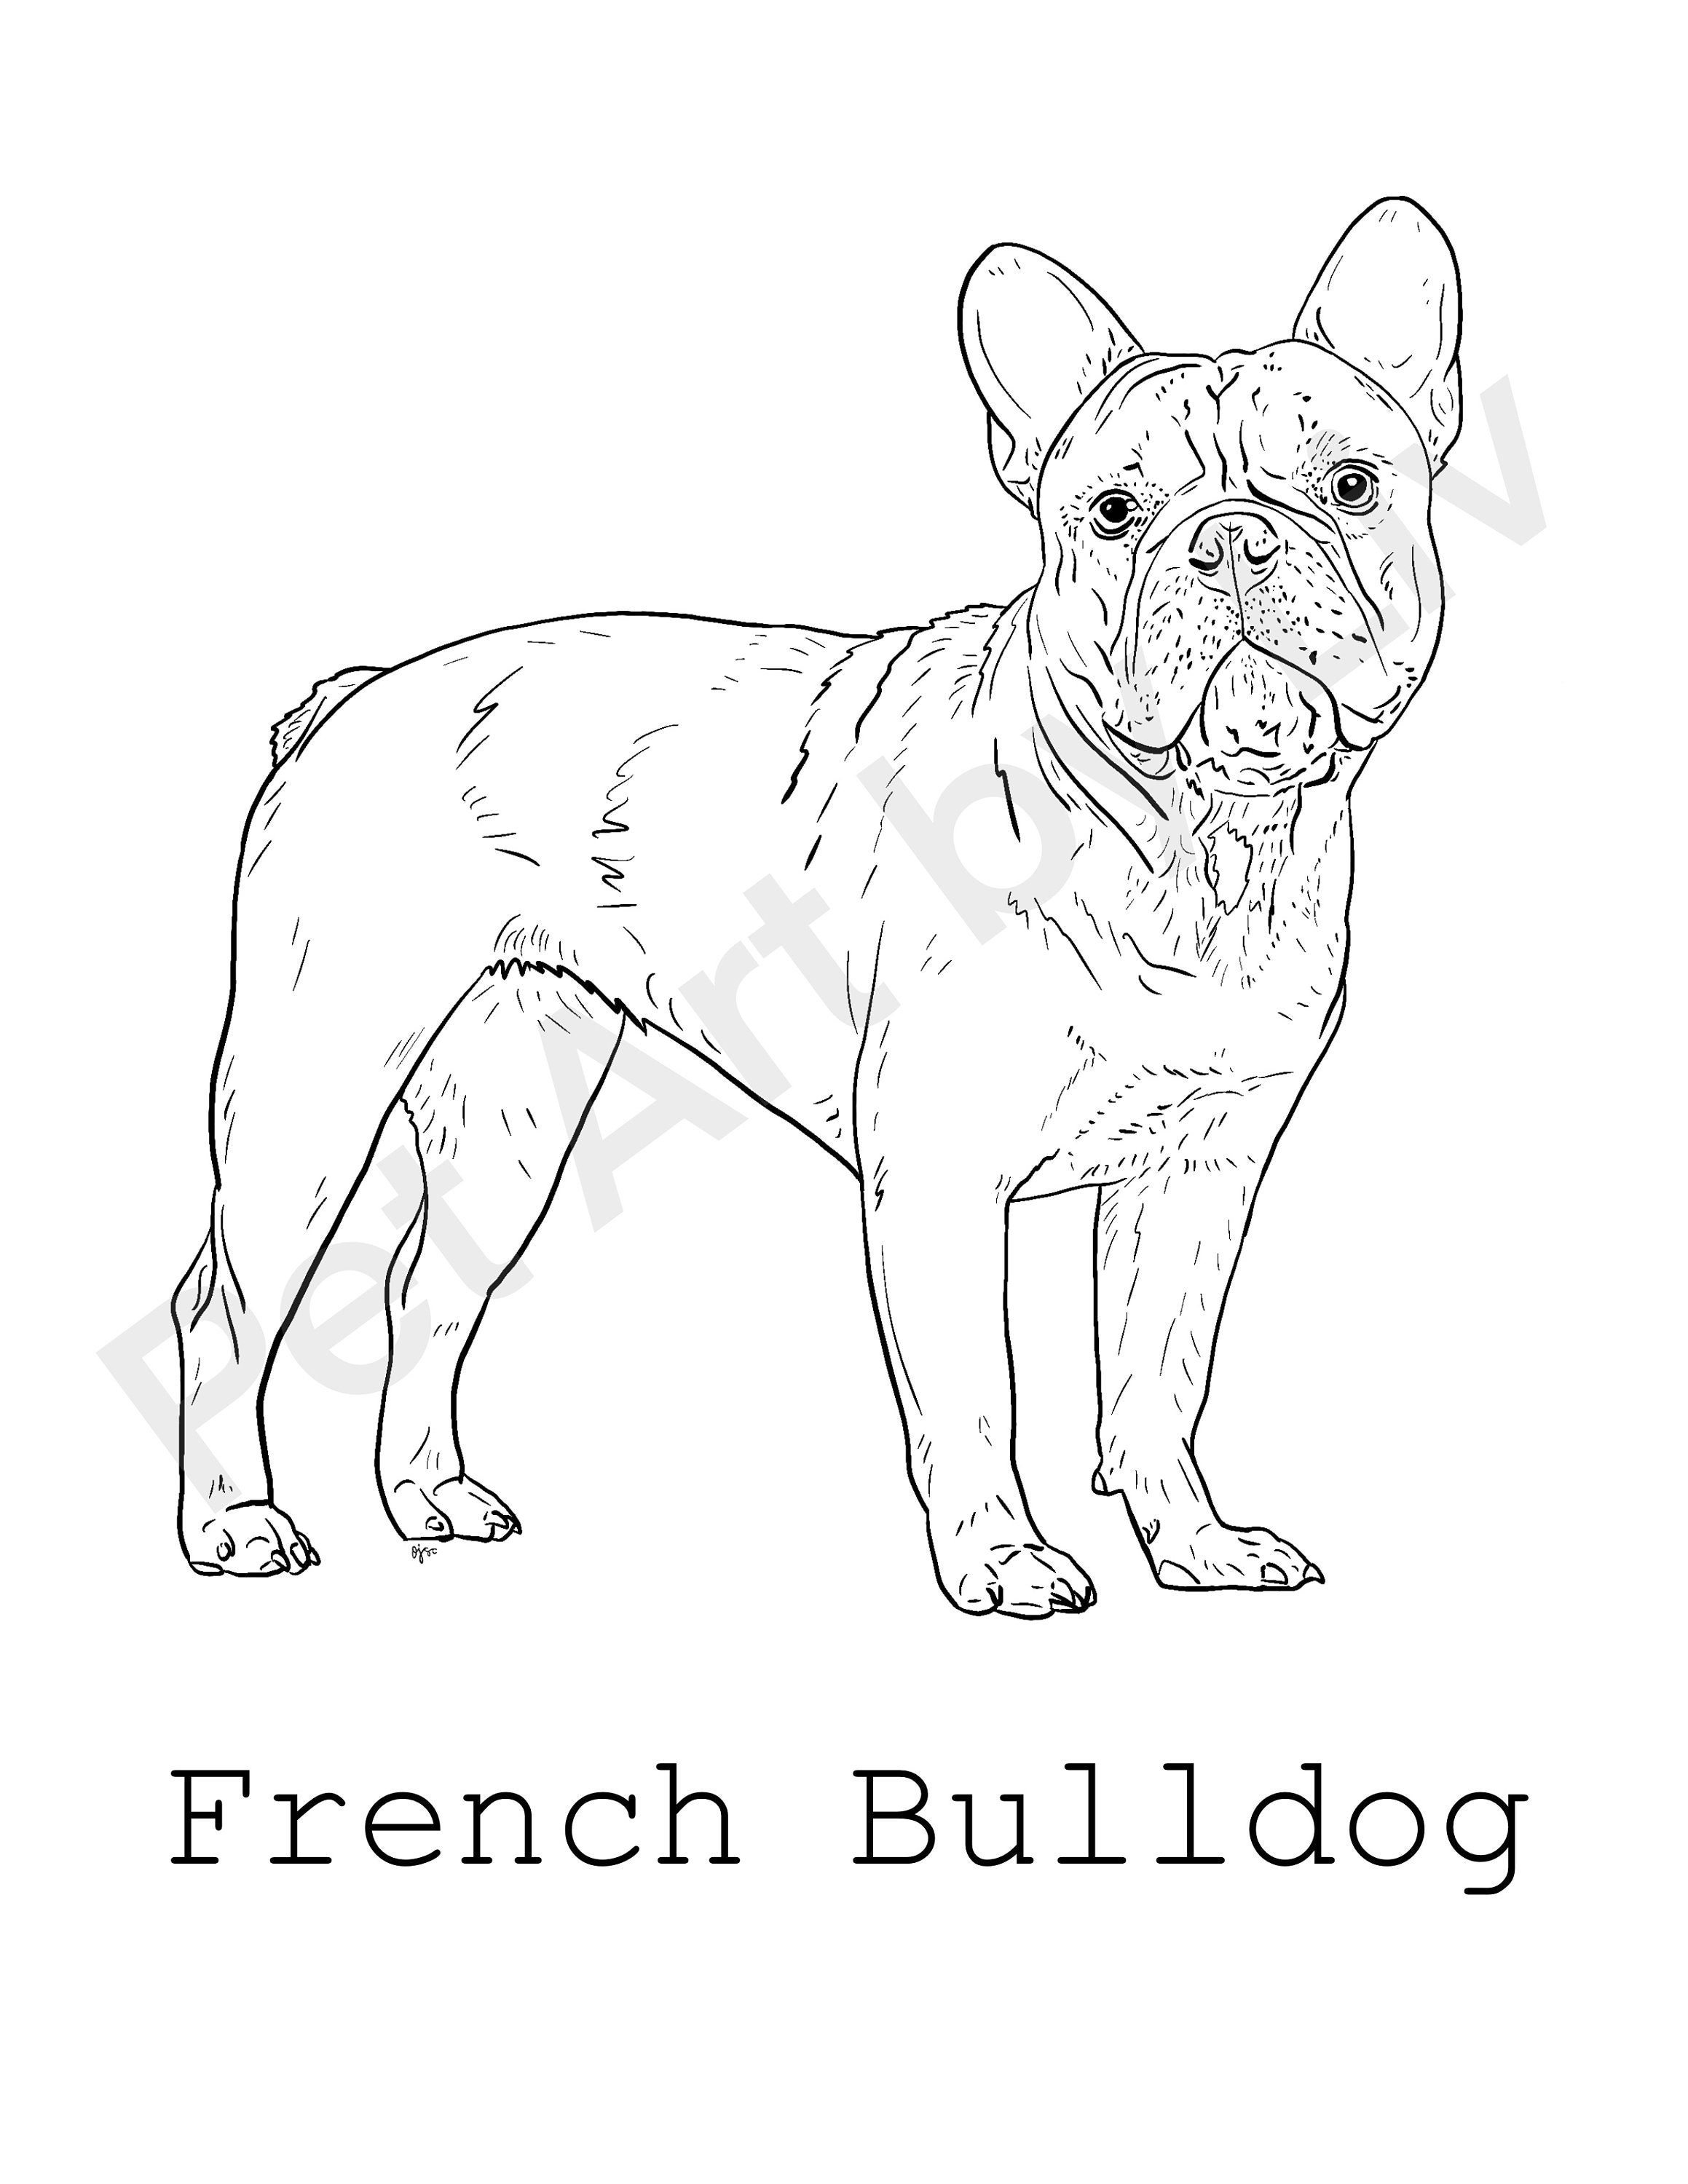 French Bulldog Coloring Page - Etsy